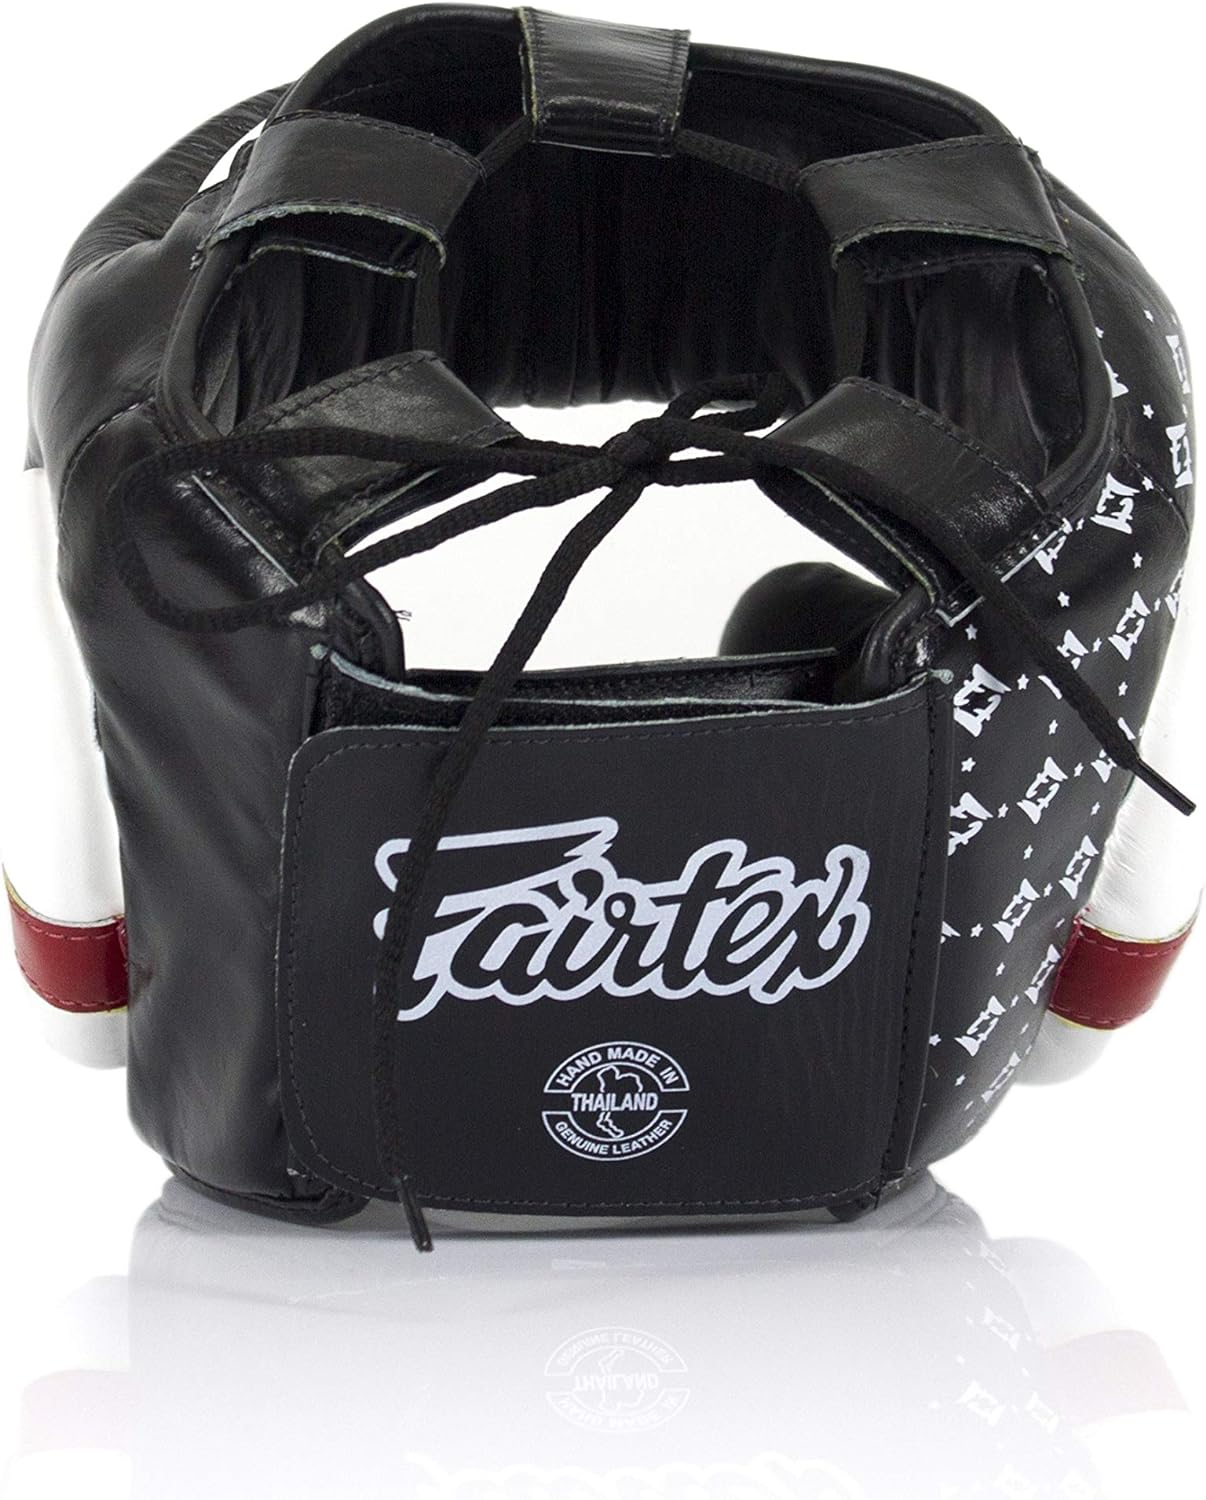 Fairfax HG10 Headgear